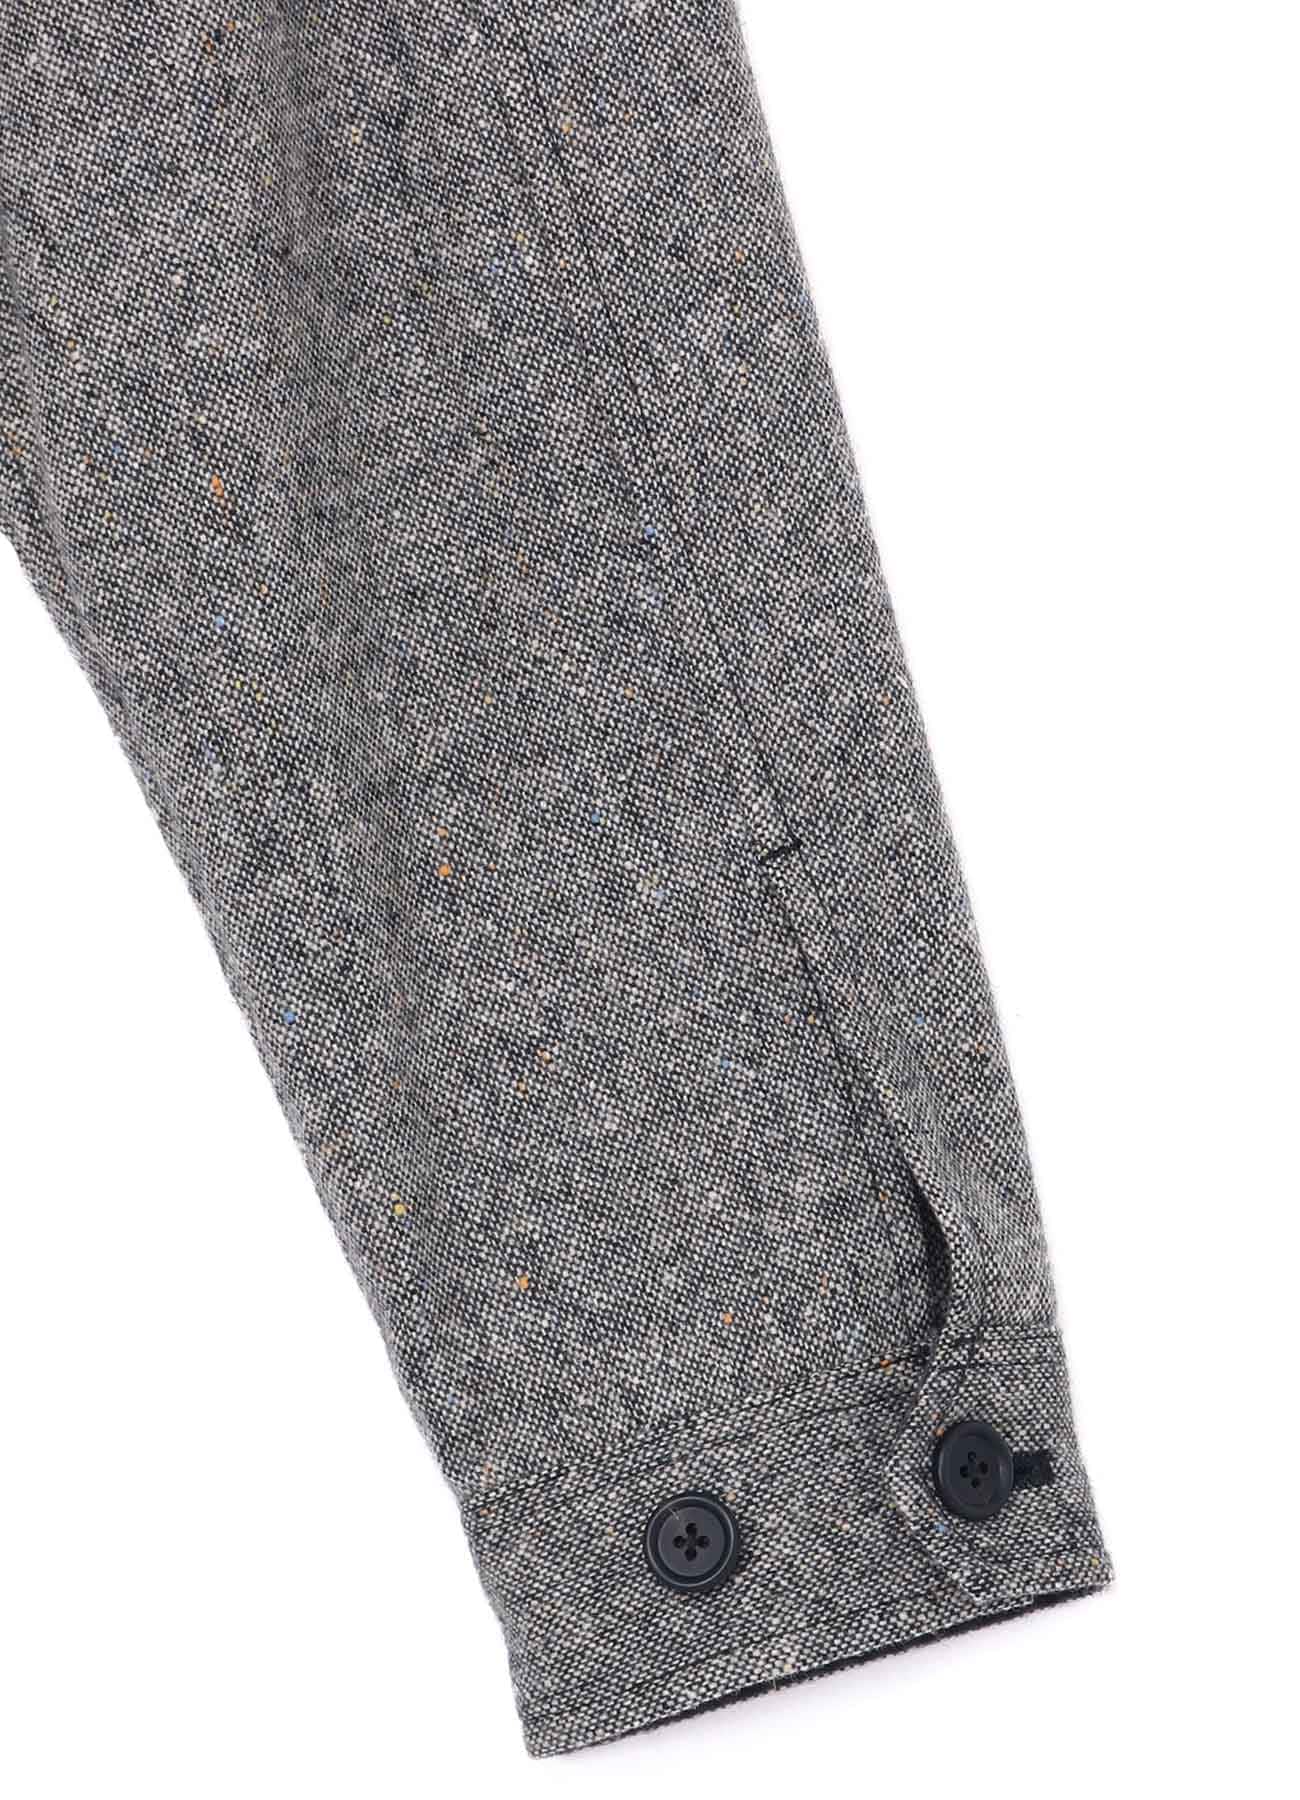 Etermine Nep Tweed All-in-One